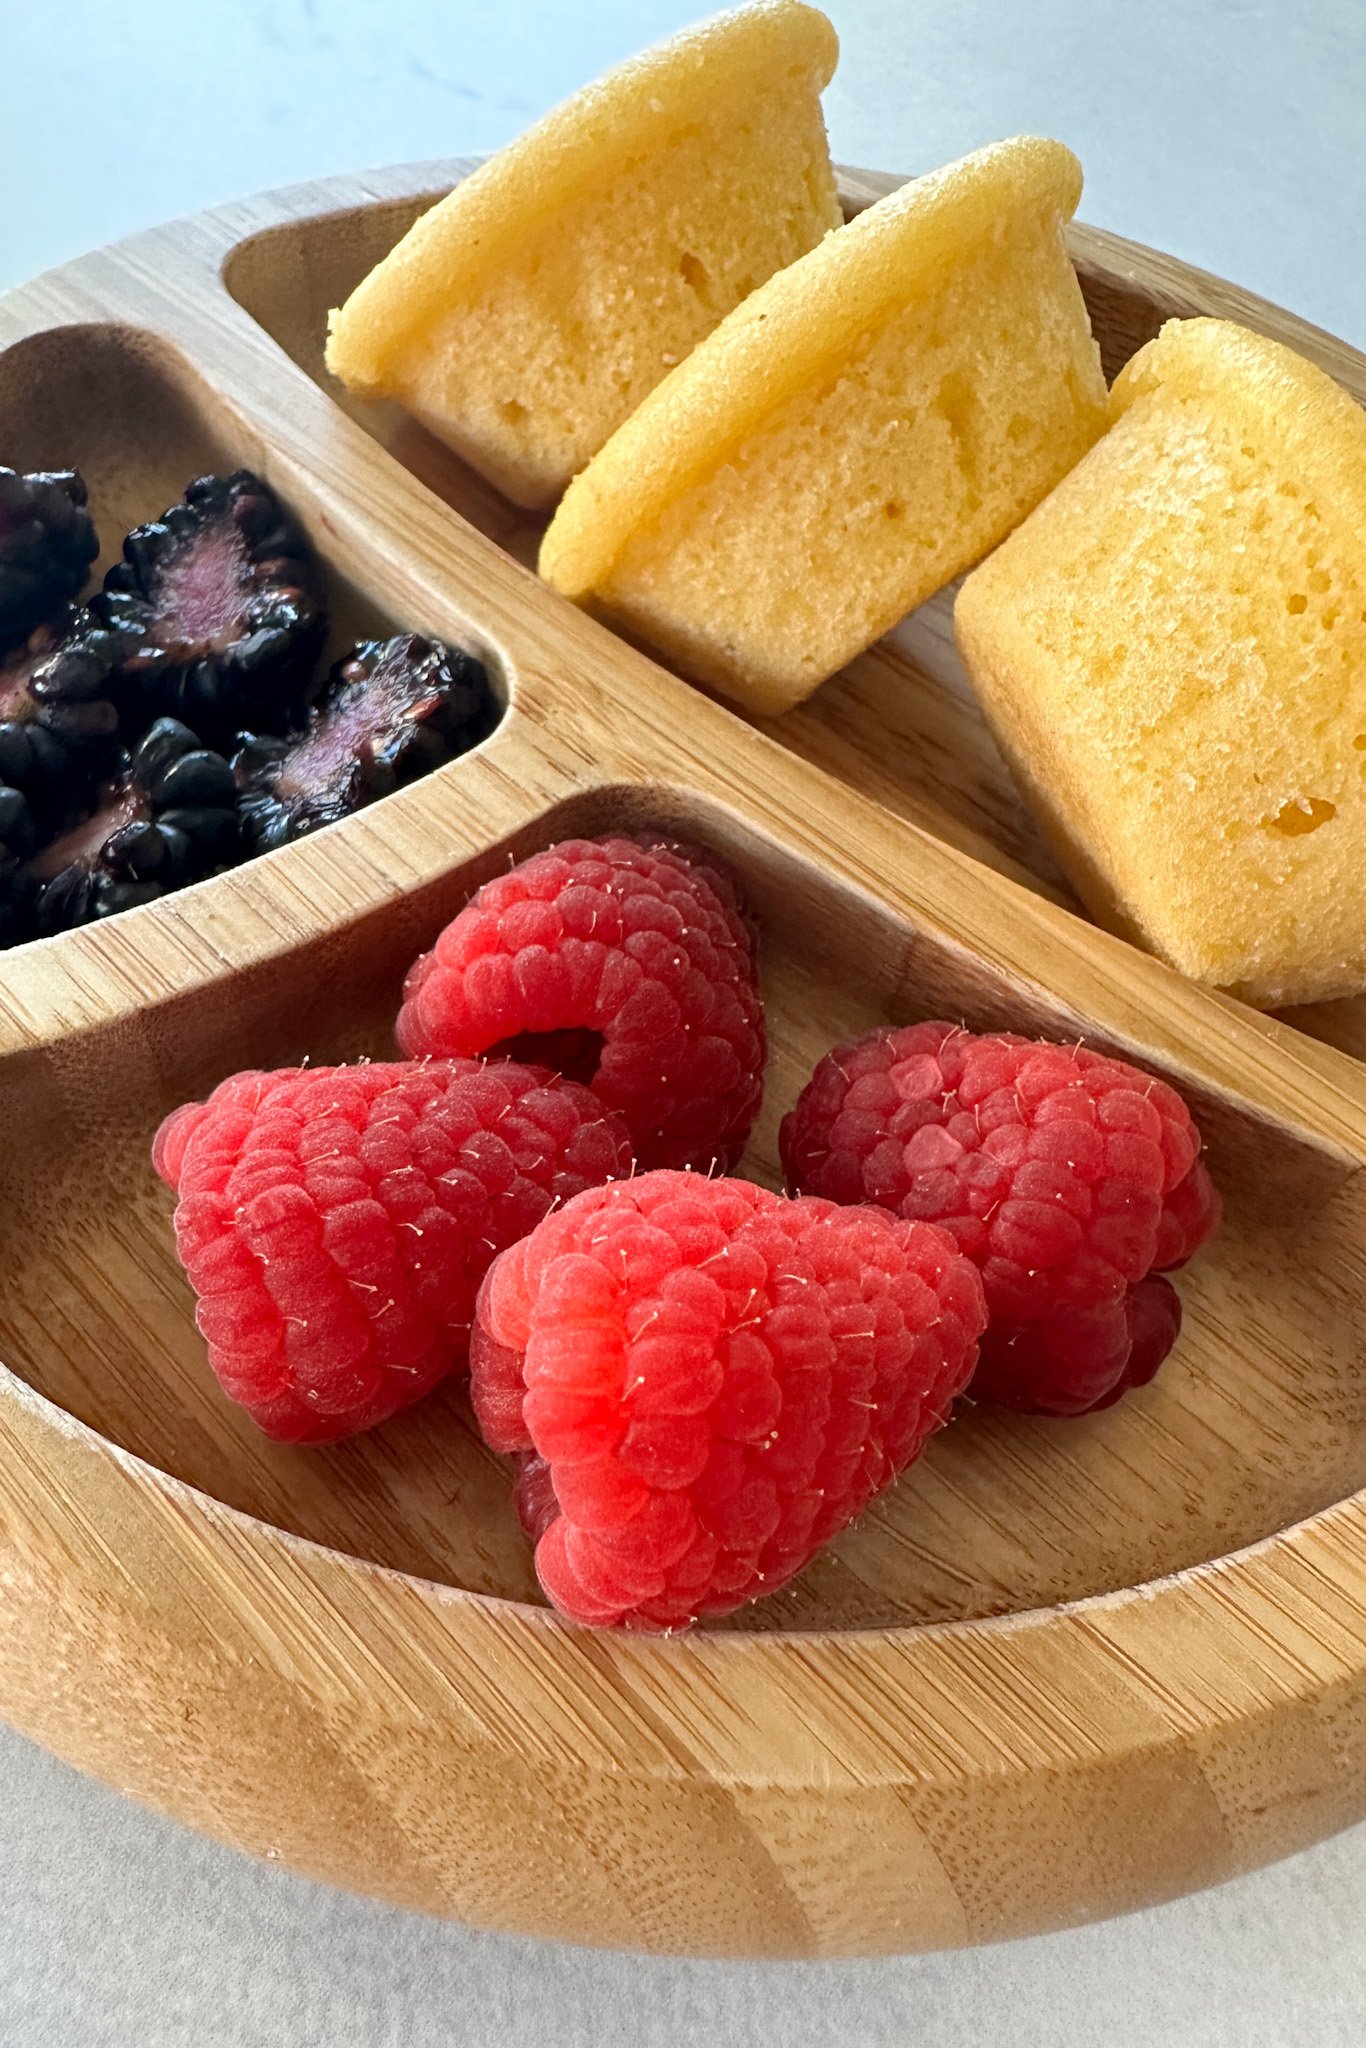 Mini cornbread muffins served with berries.